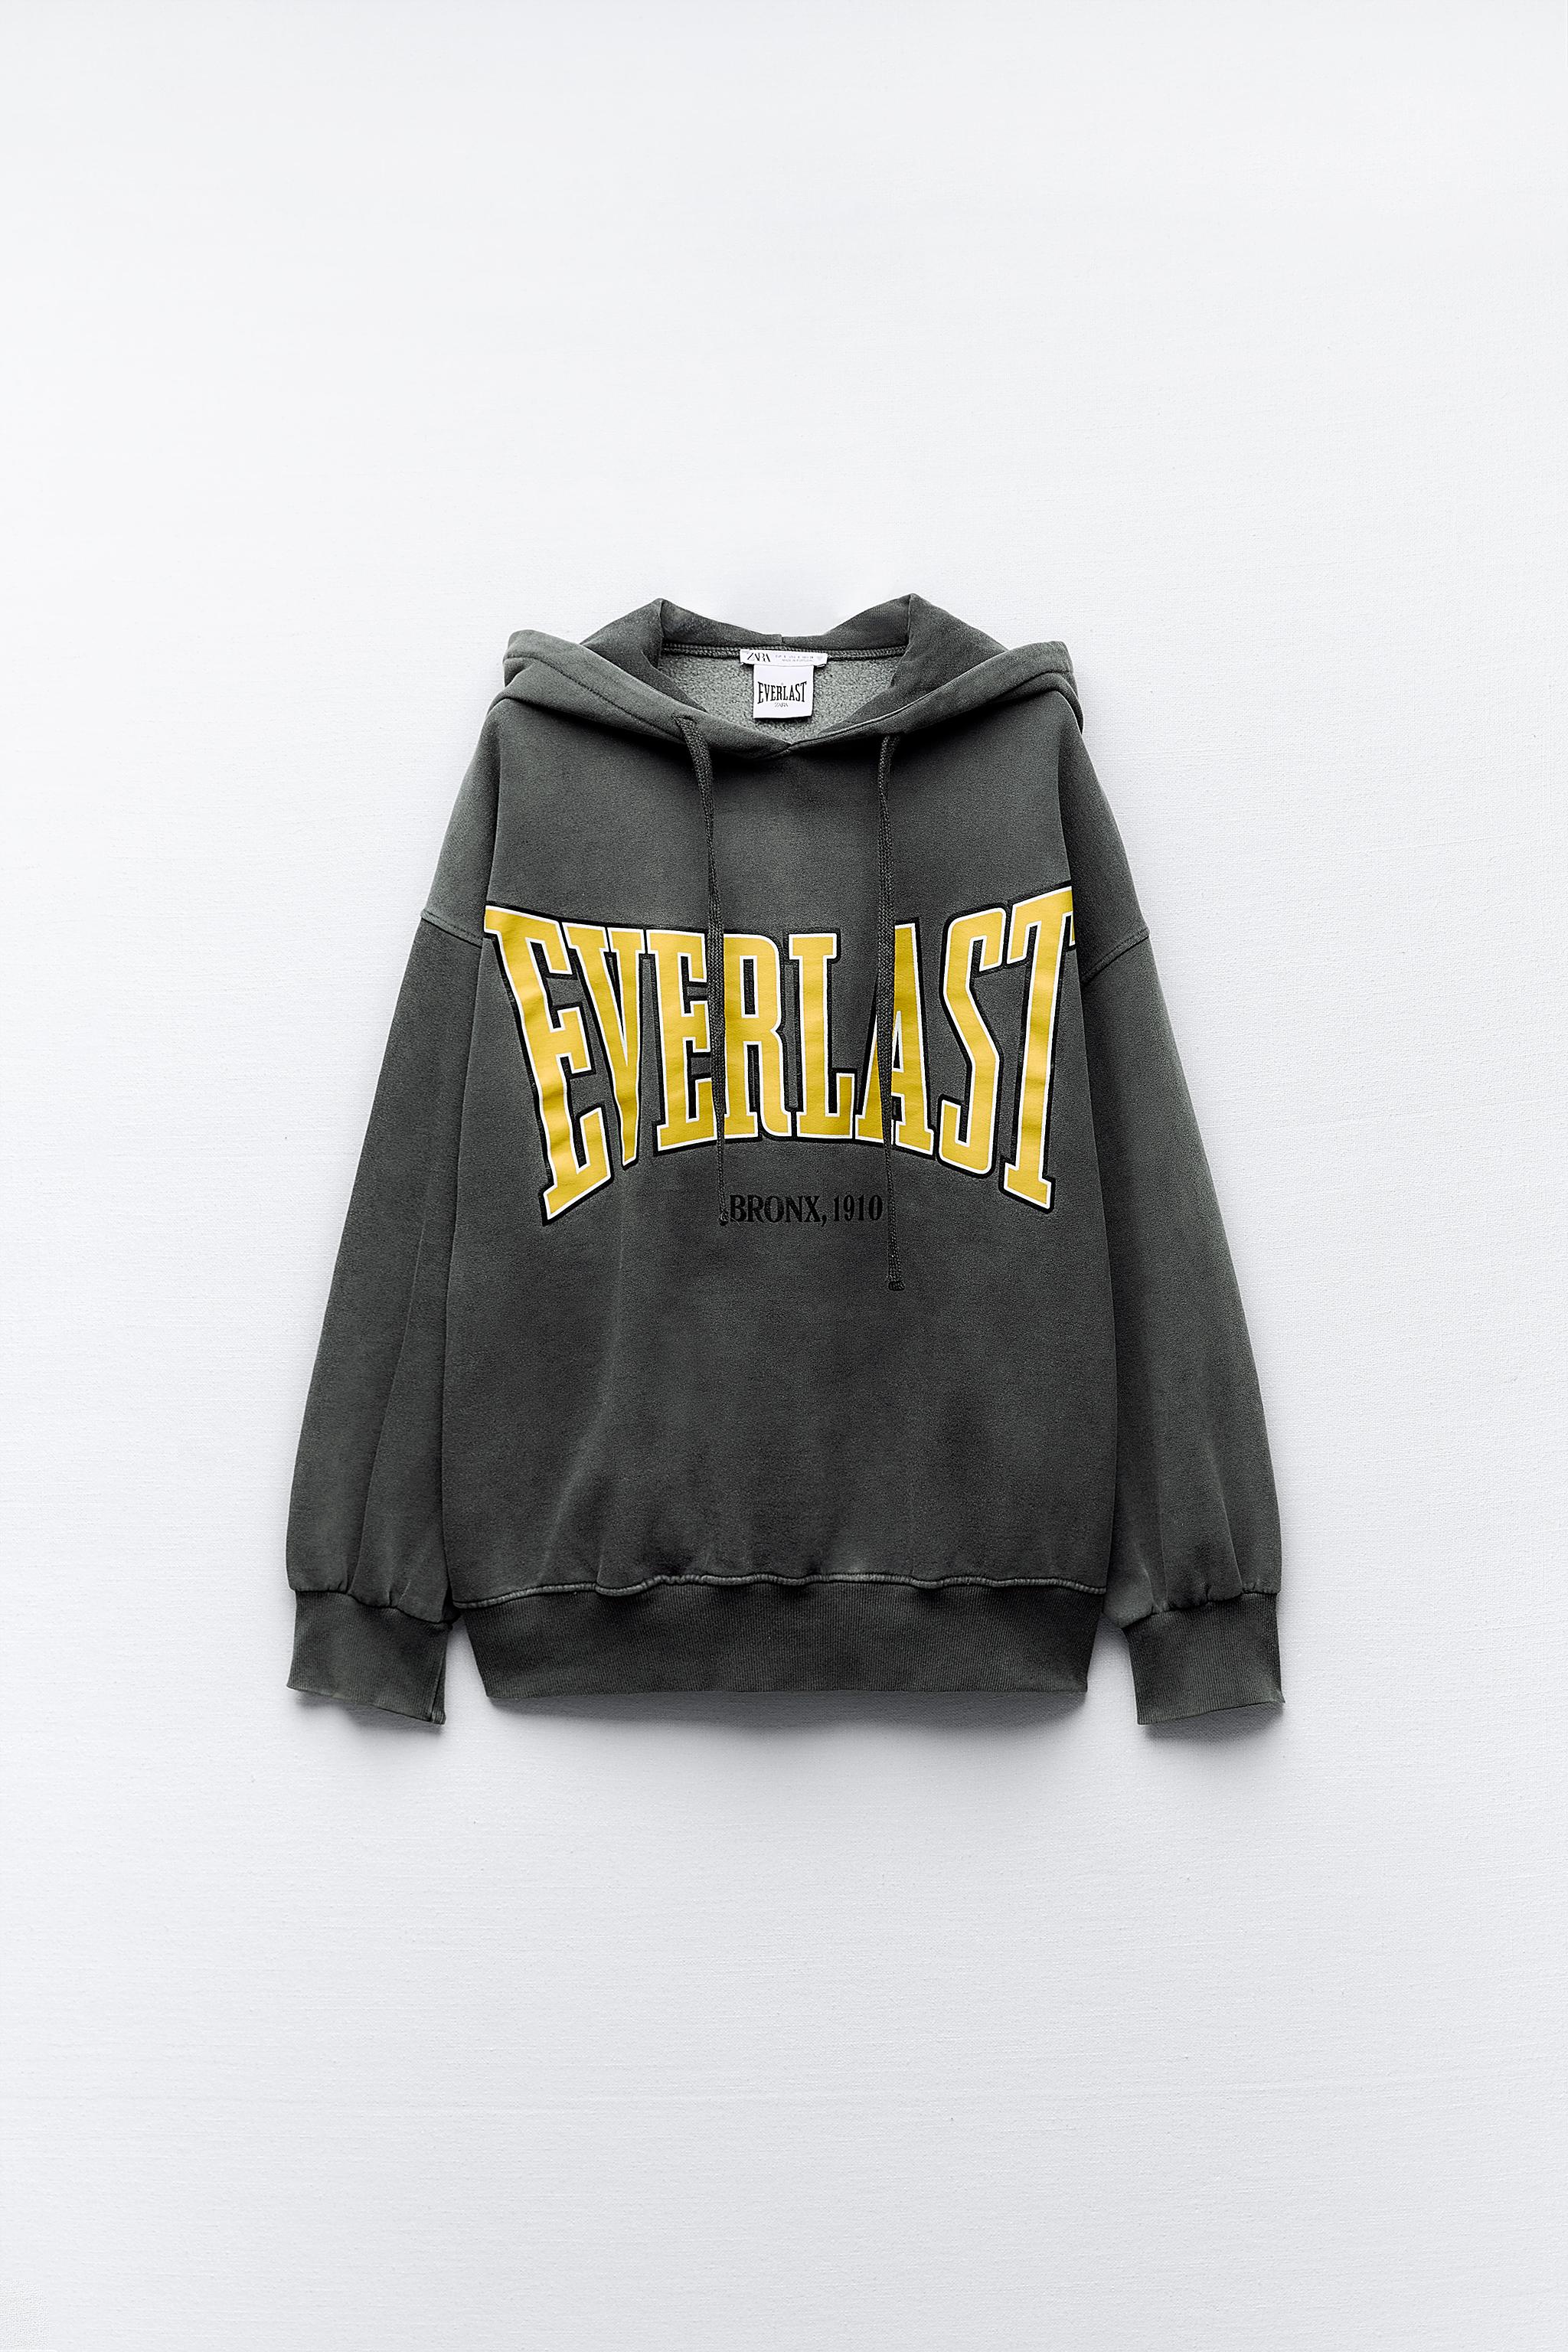 Everlast Mens Sweatshirt : : Clothing, Shoes & Accessories